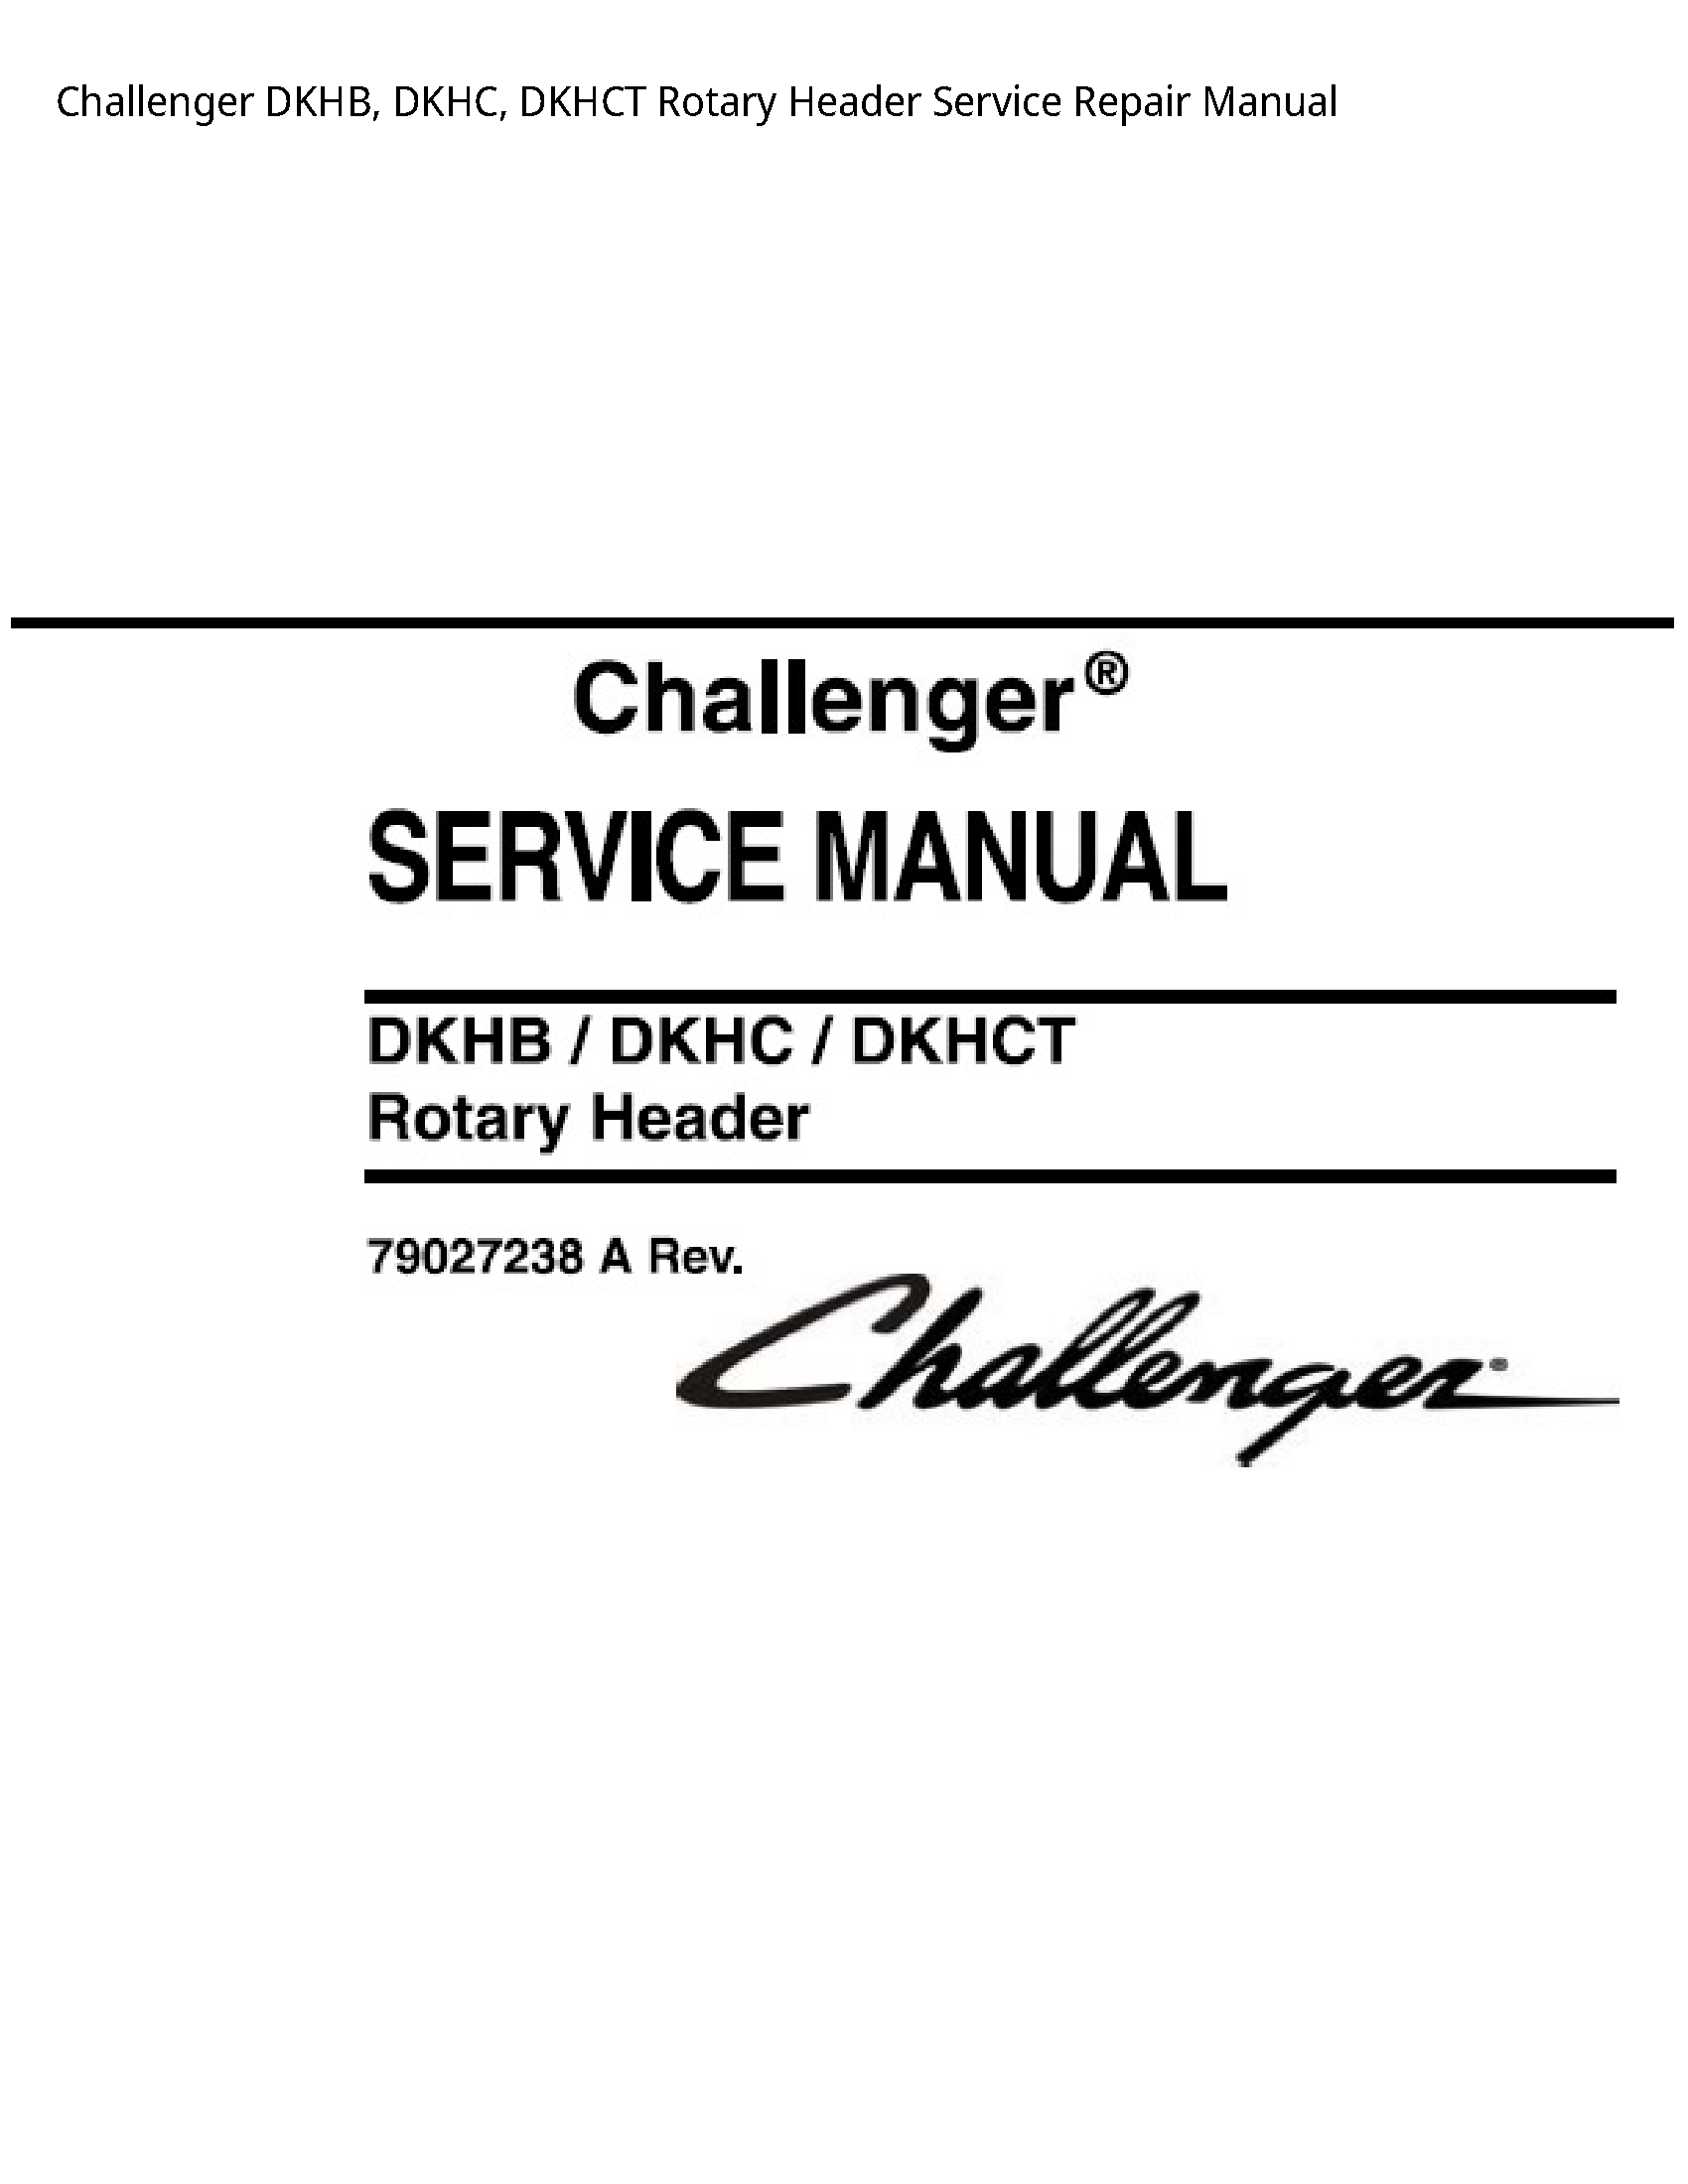 Challenger DKHB manual